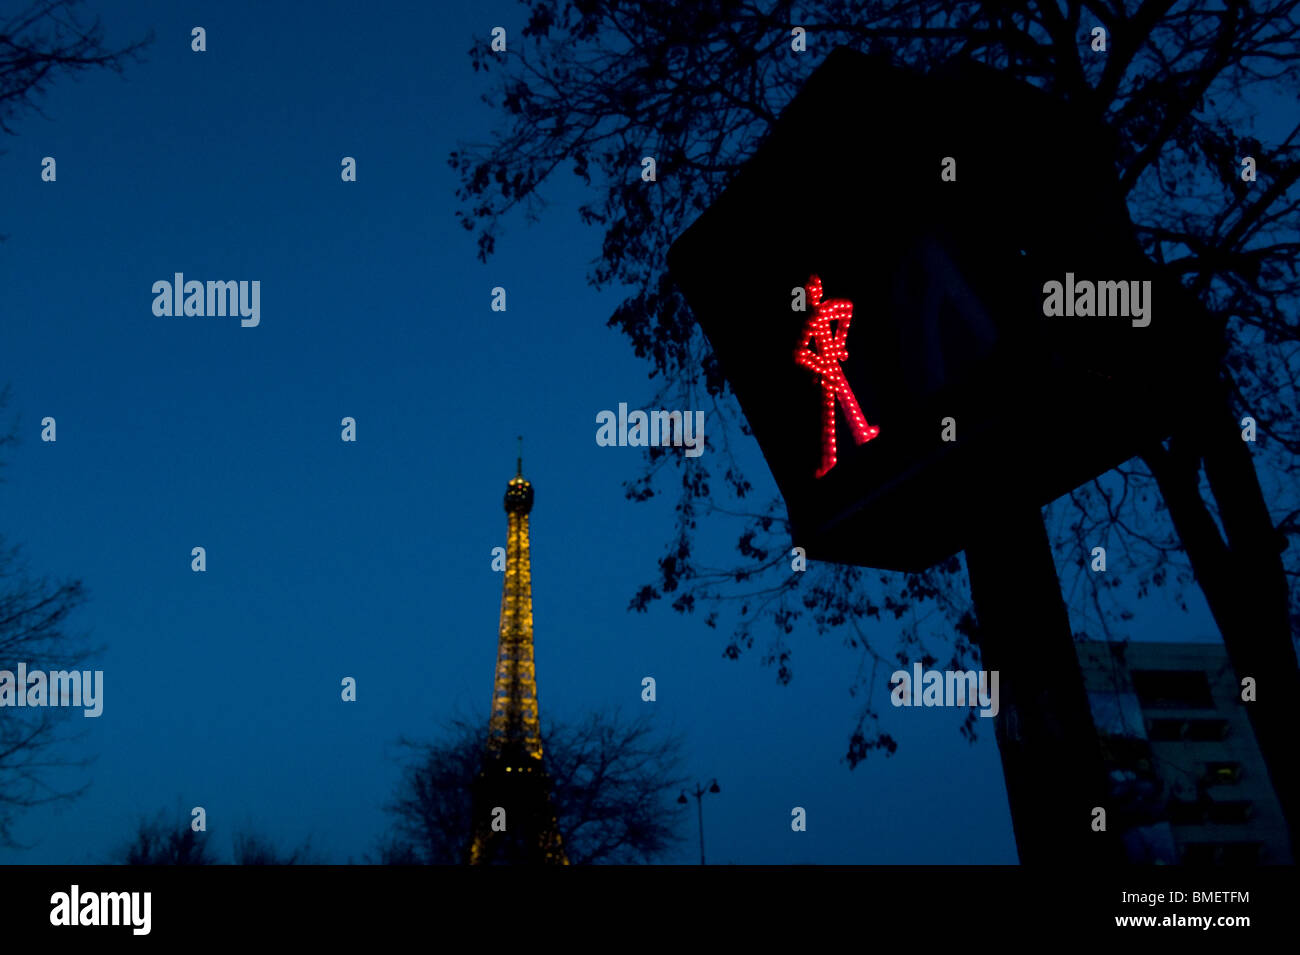 traffic lights, feu de signalisation, homme rouge, red man, tour eiffel, Eiffel tower Stock Photo